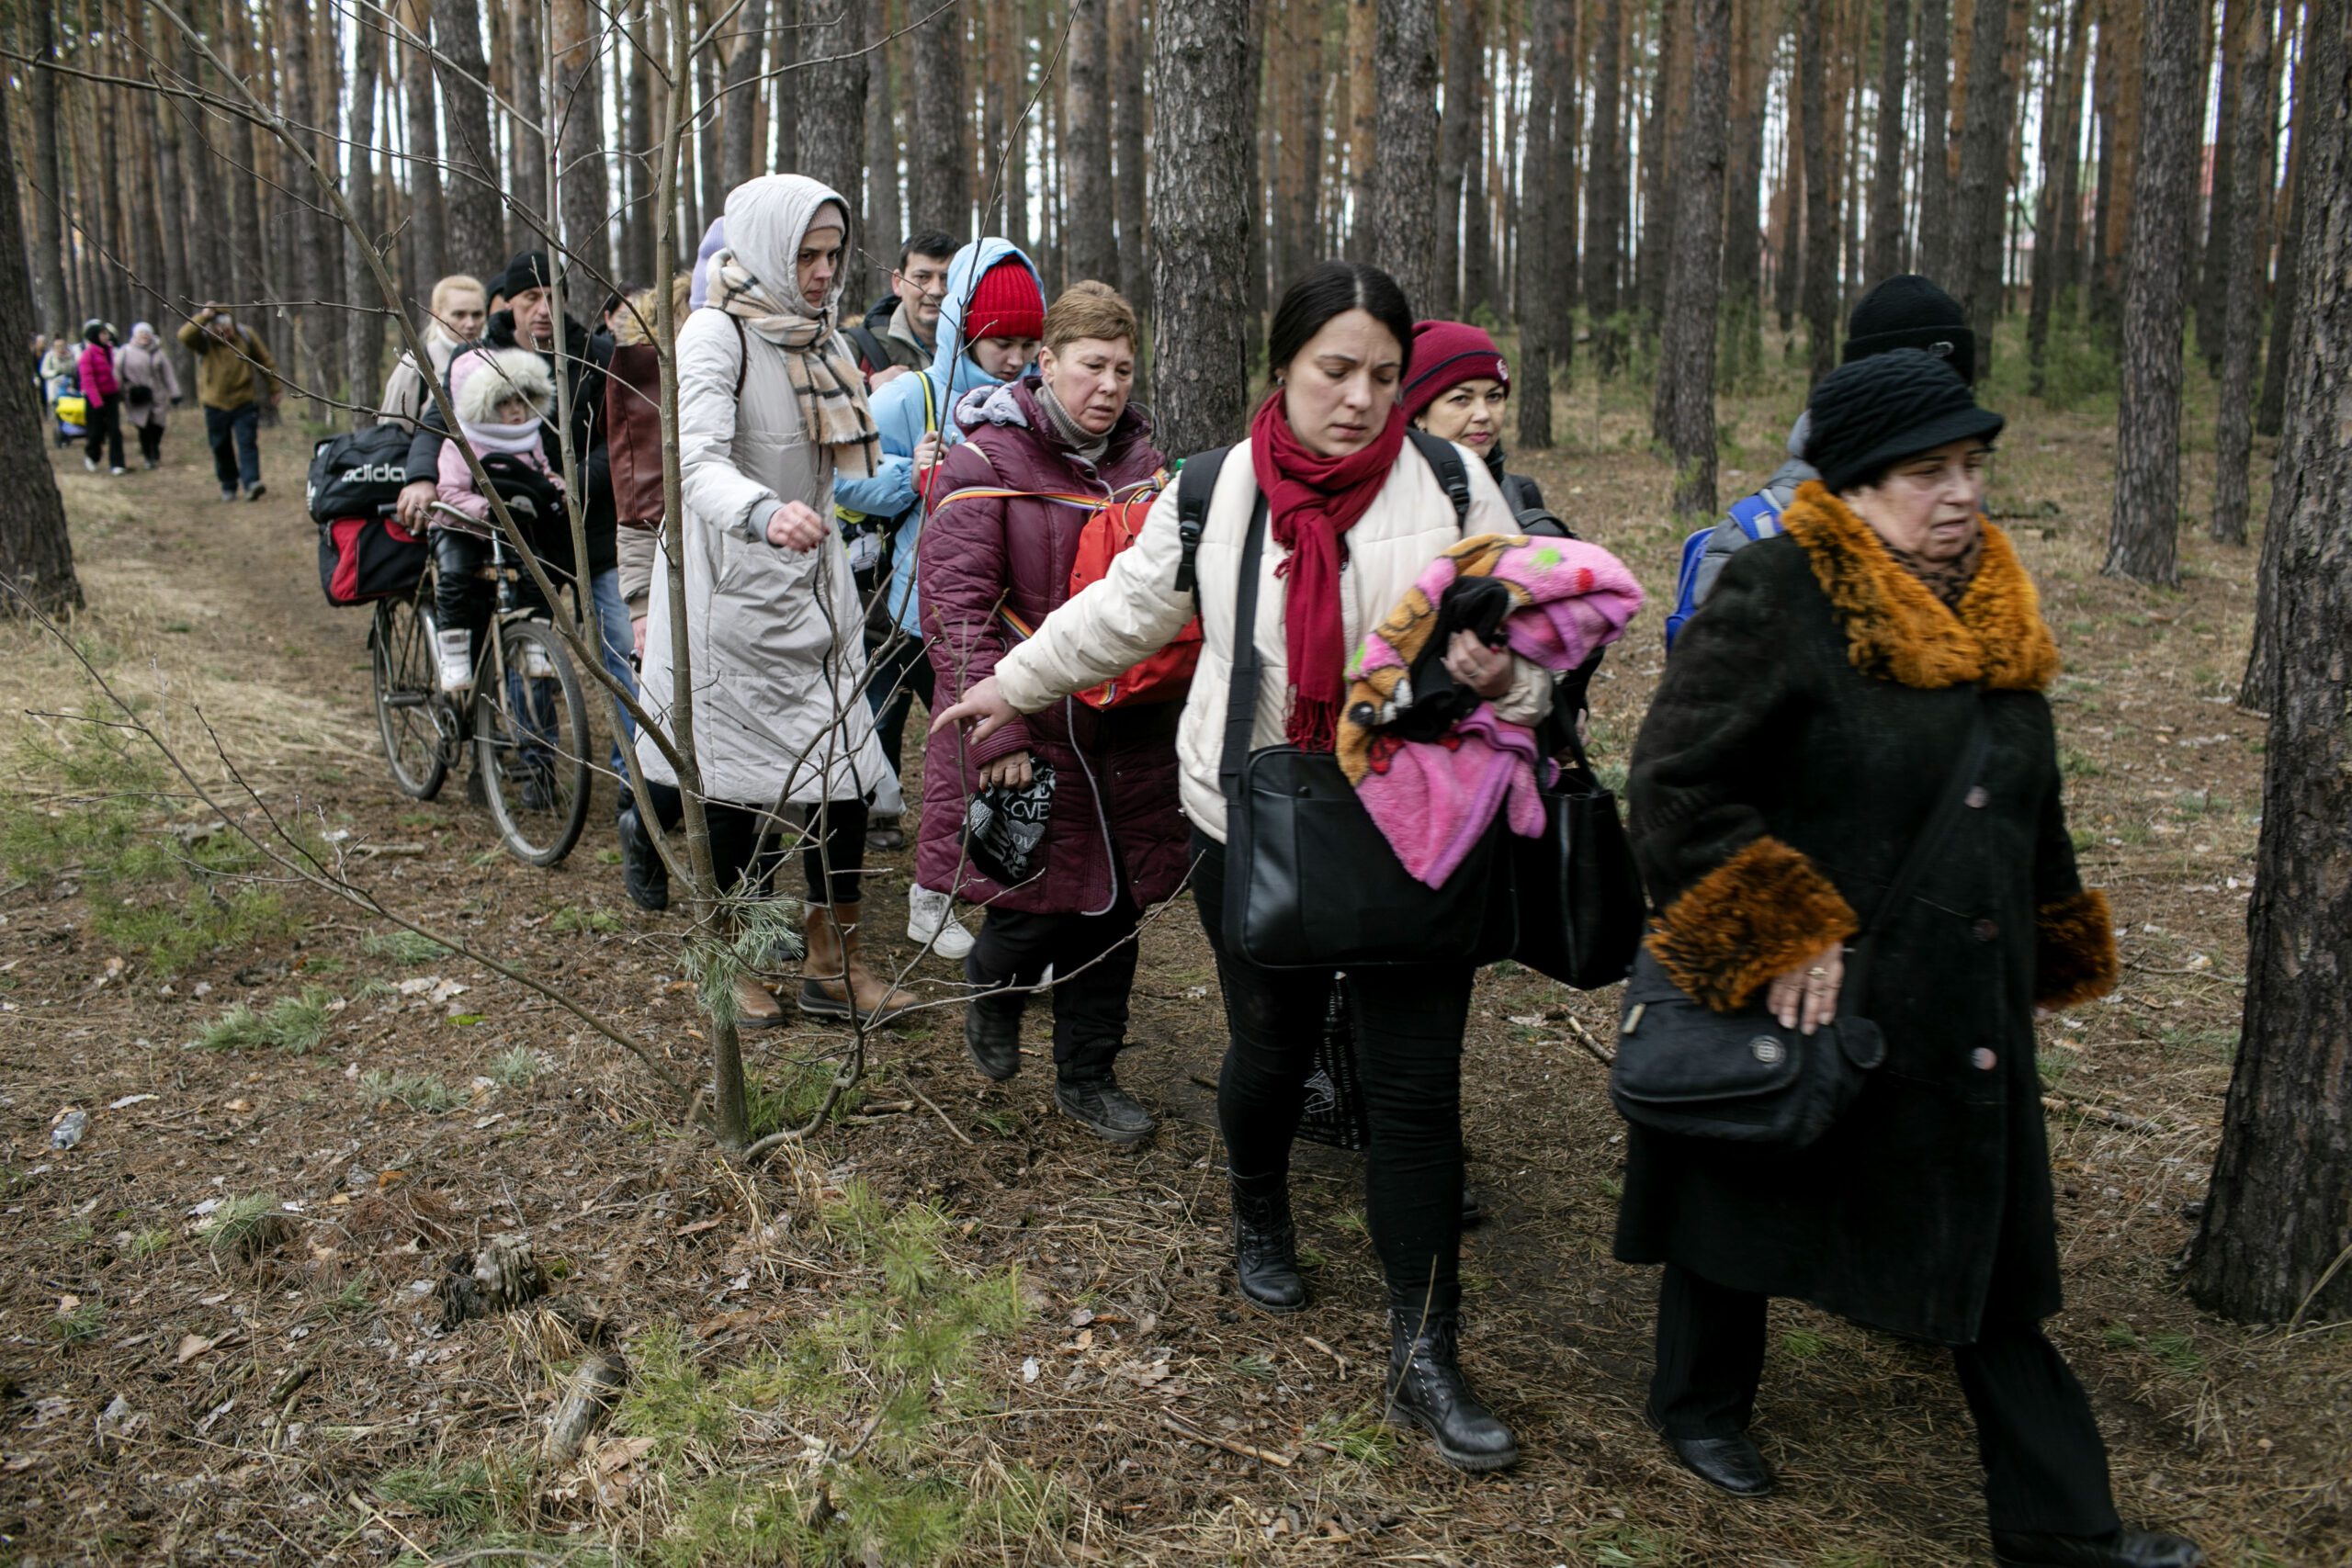 Civilians flee the city of Irpin, Kiev, Ukraine, during heavy